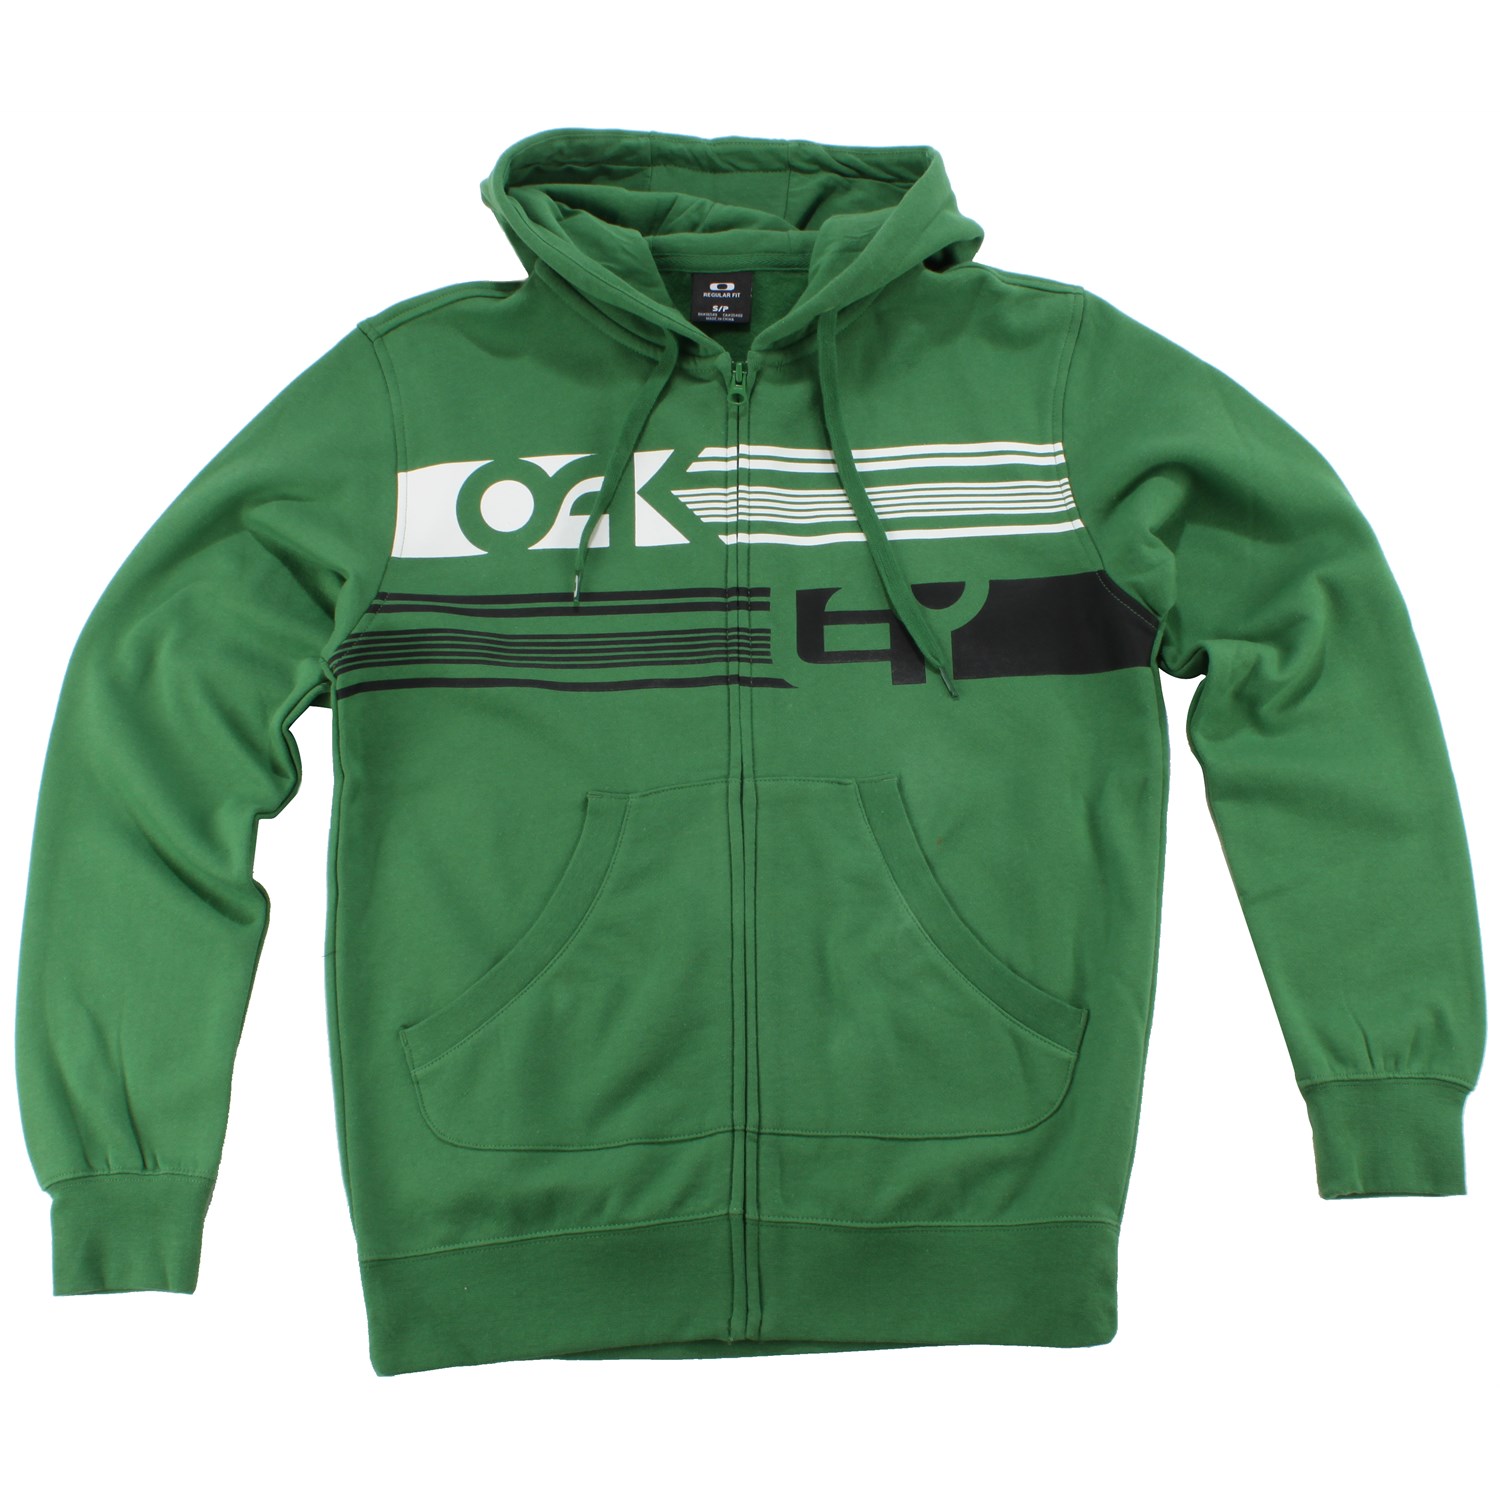 oakley zip hoodie